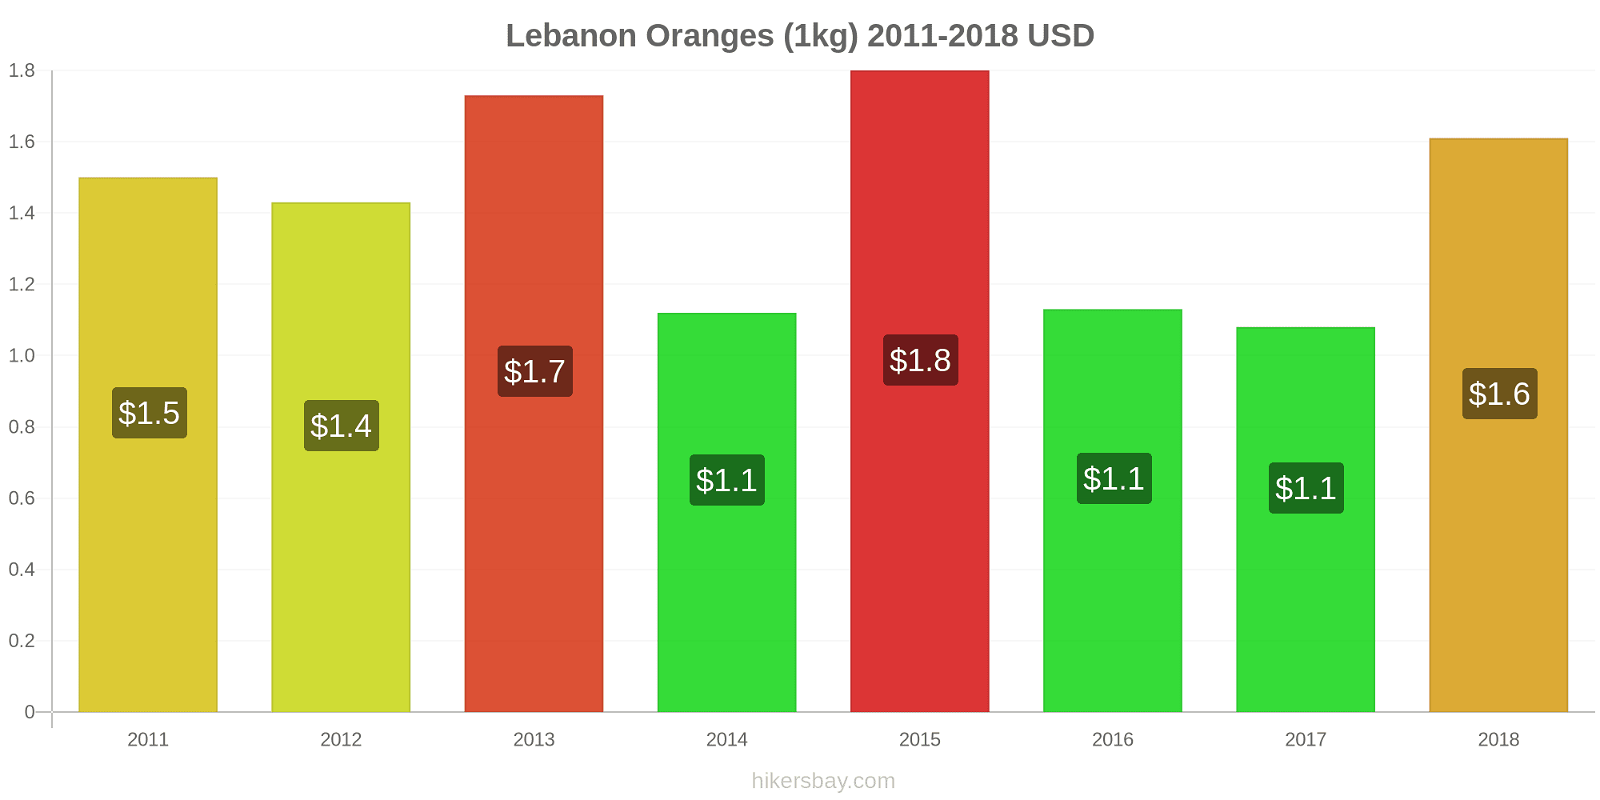 Lebanon price changes Oranges (1kg) hikersbay.com